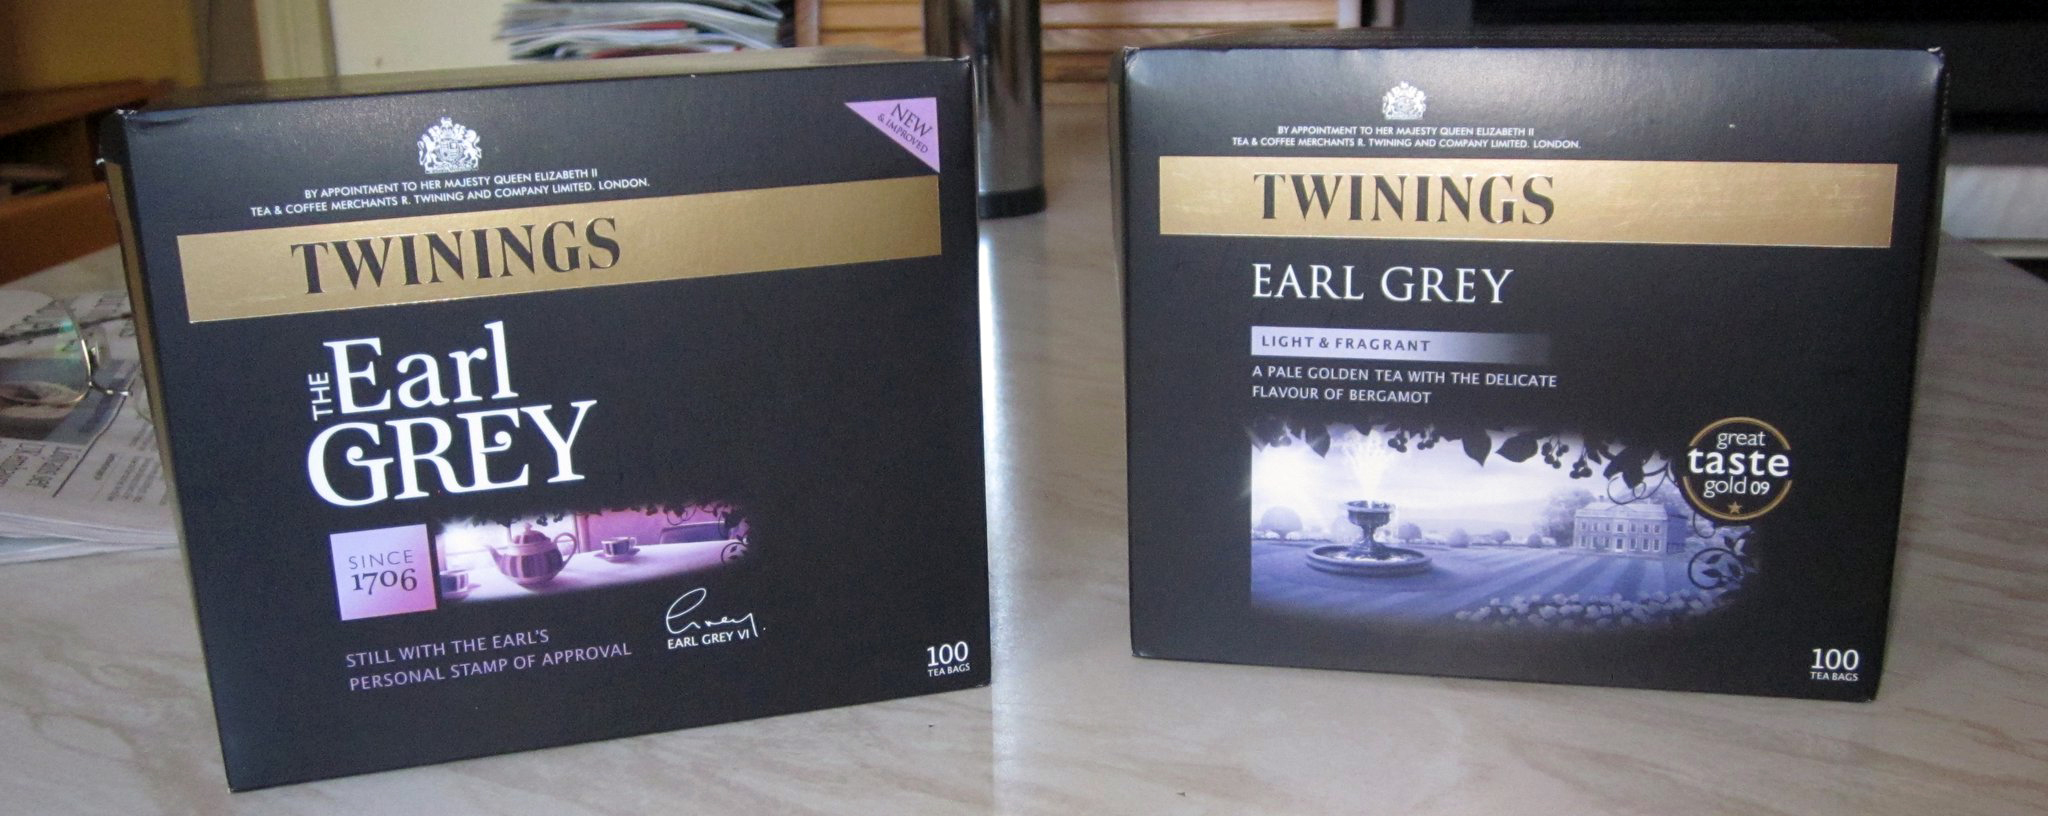 Twinings The Earl Grey vs. Twinings Earl Grey Classic recipe.